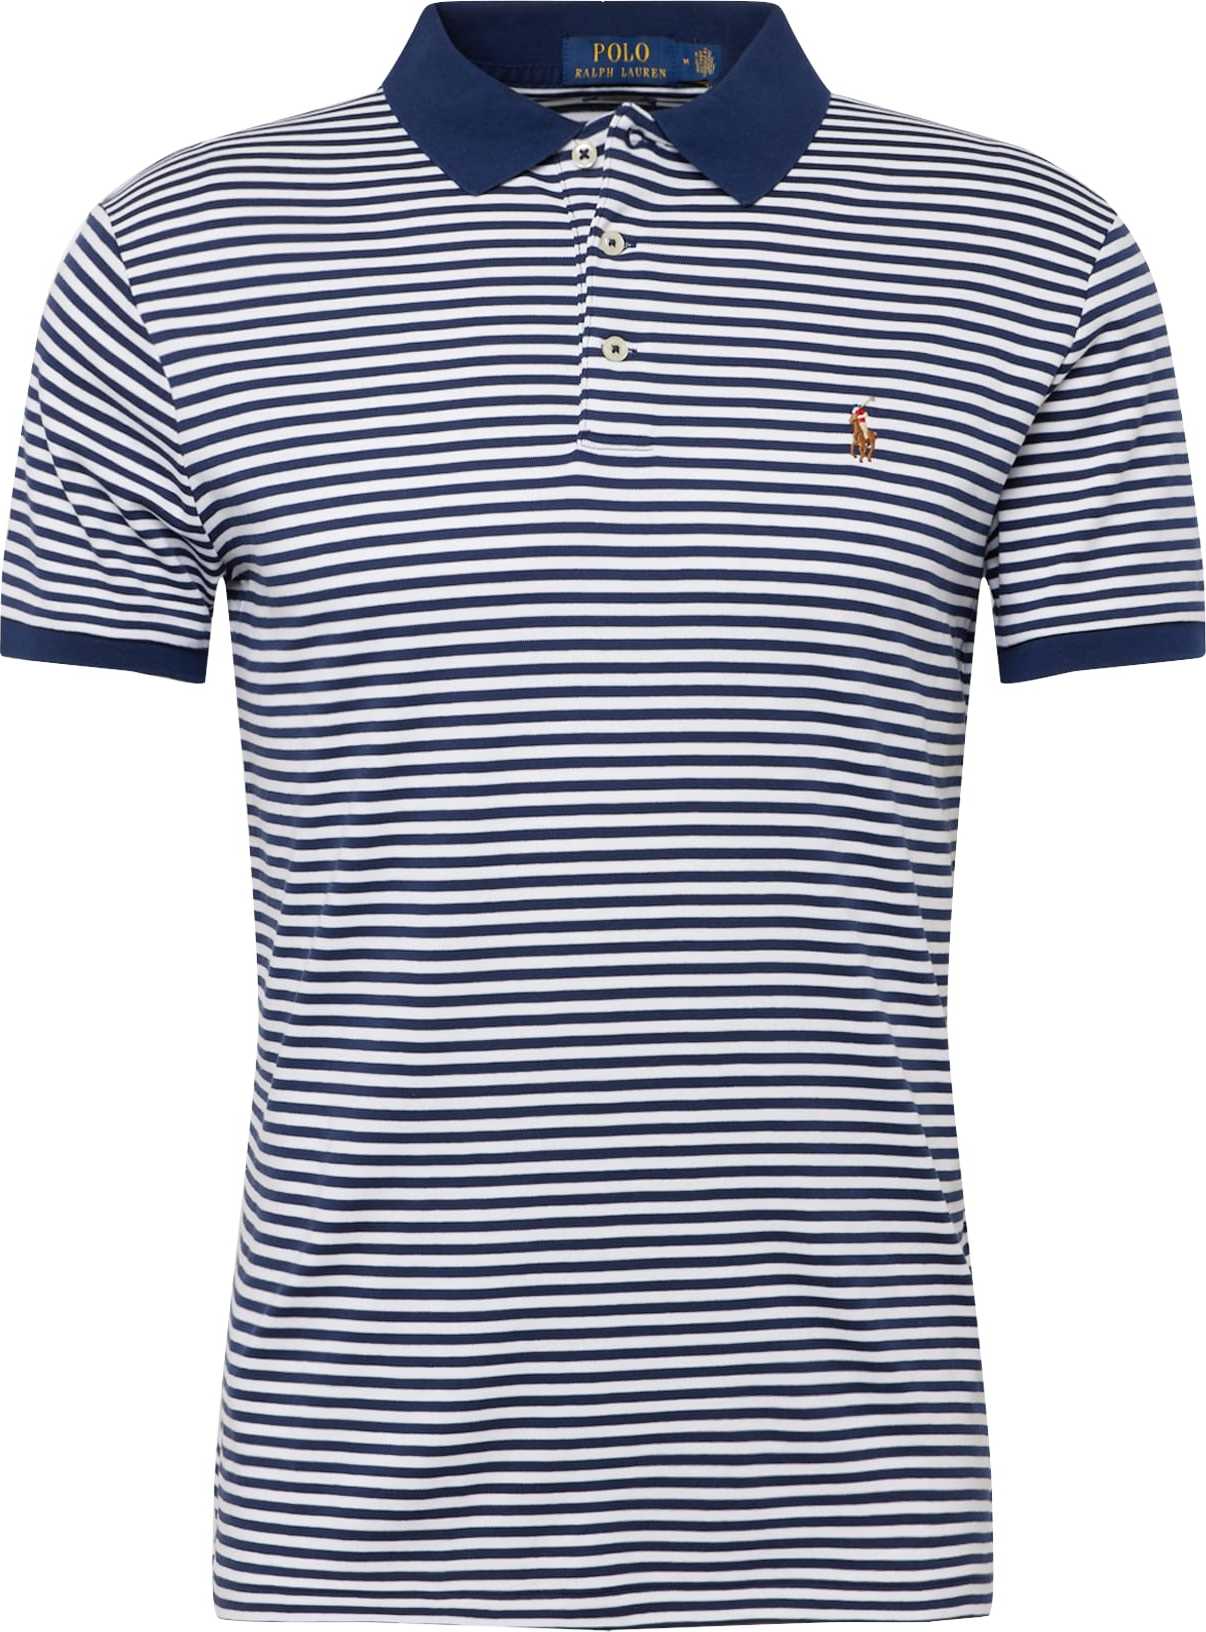 Tričko Polo Ralph Lauren námořnická modř / bílá